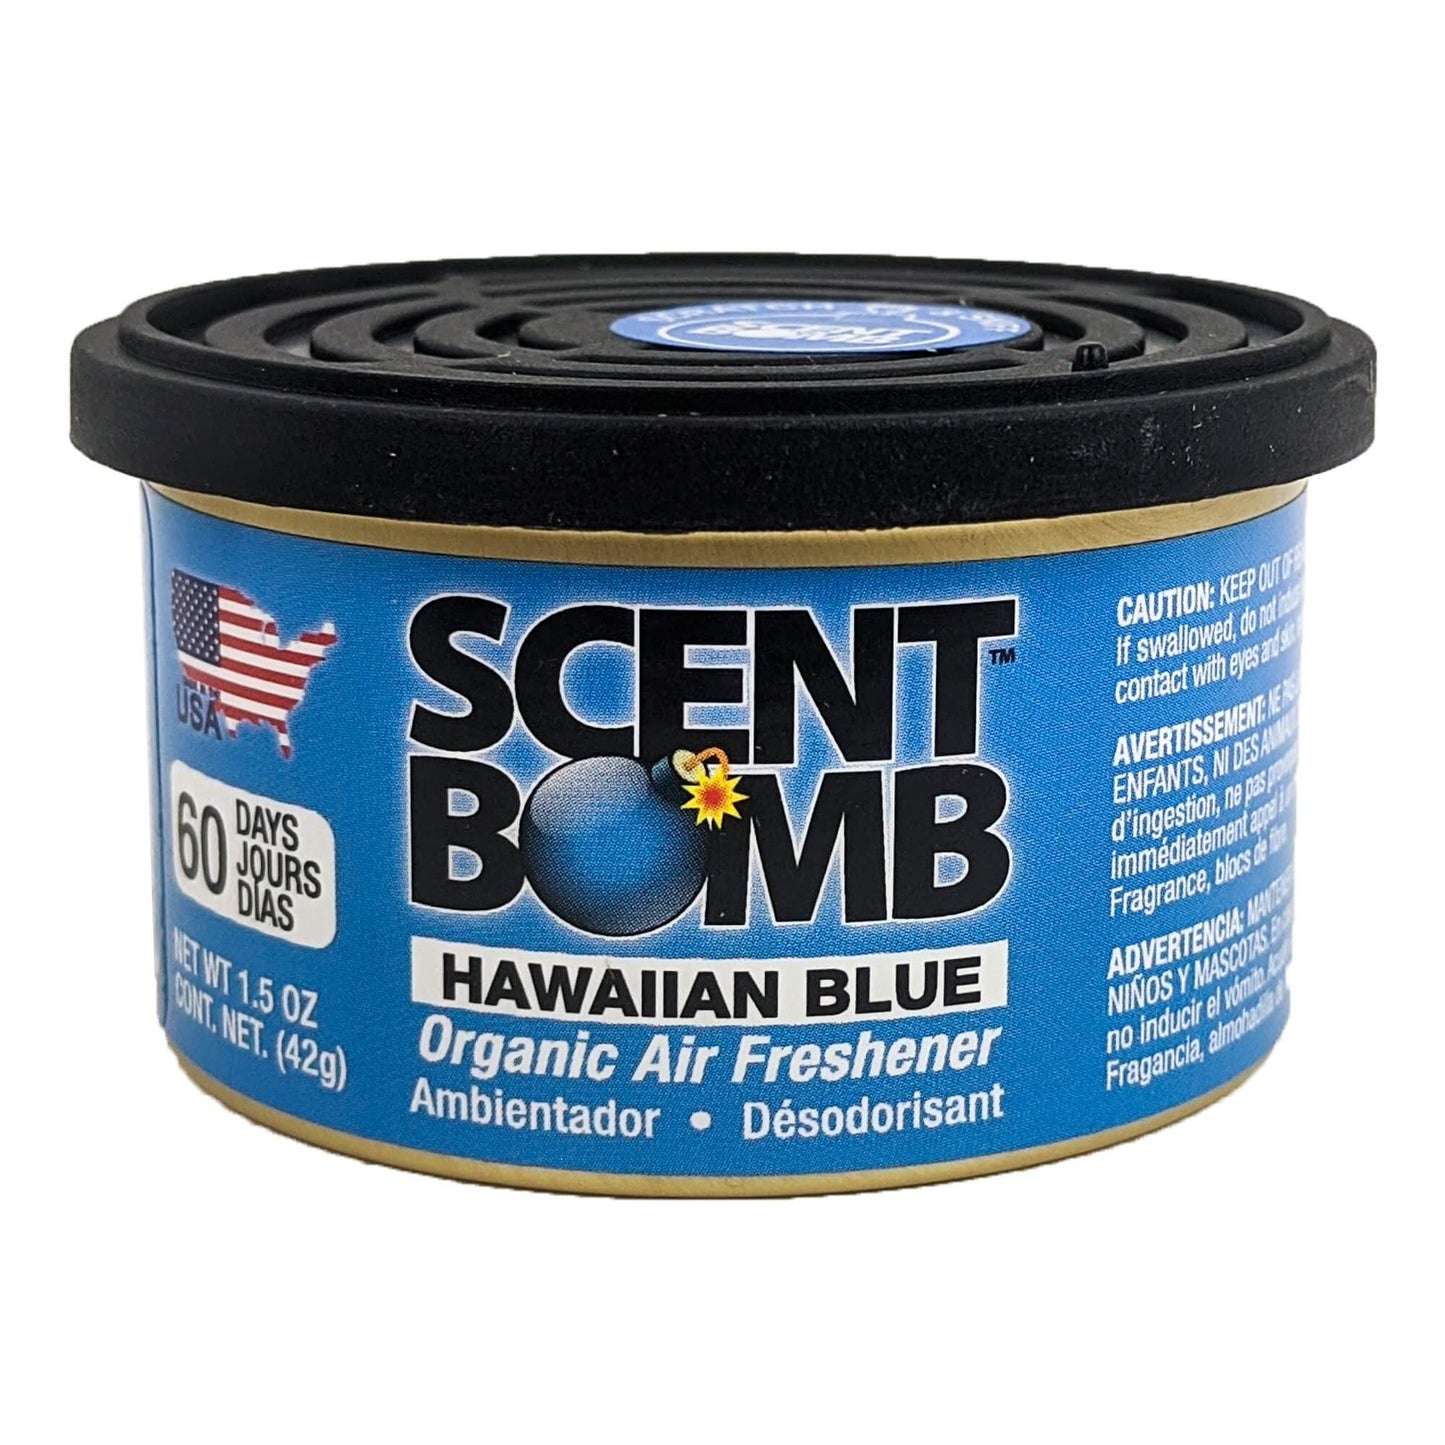 Hawaiian Blue Scent Bomb Organic Air Freshener Scent Can